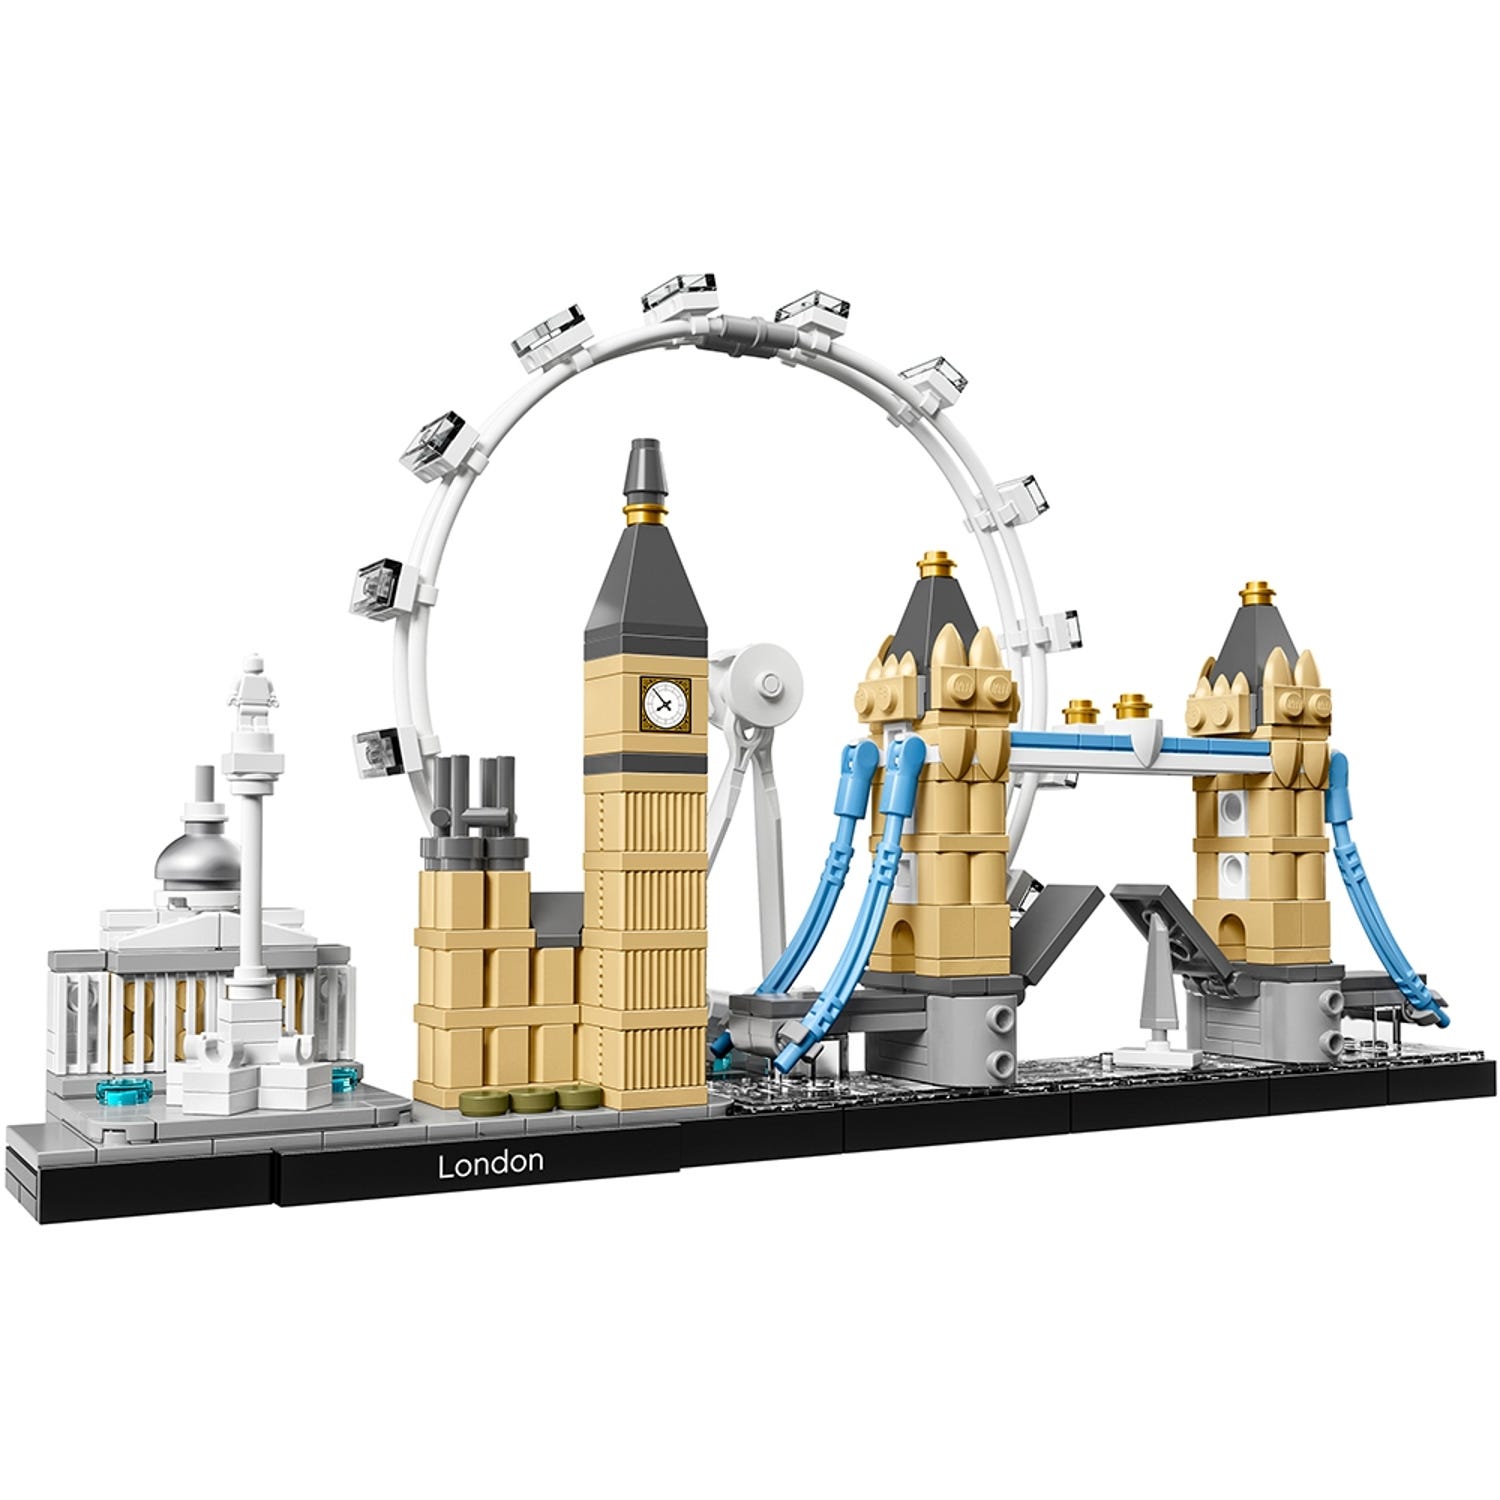 Acrylic Case with Black Base for 21034 LEGO Architecture London